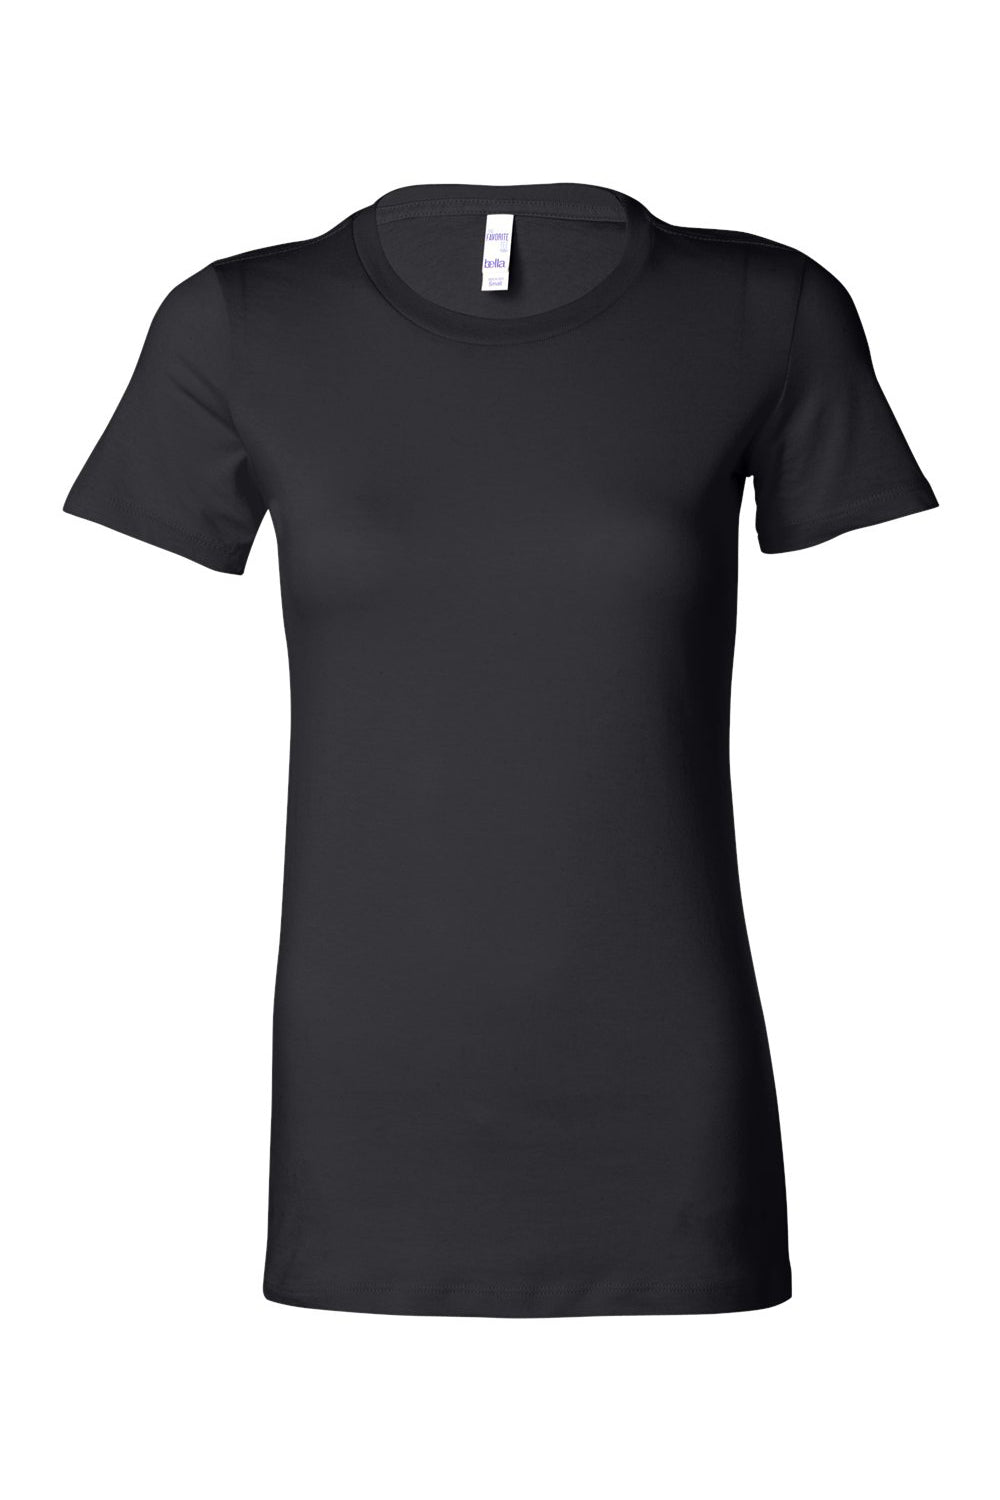 Bella + Canvas BC6004/6004 Womens The Favorite Short Sleeve Crewneck T-Shirt Black Flat Front